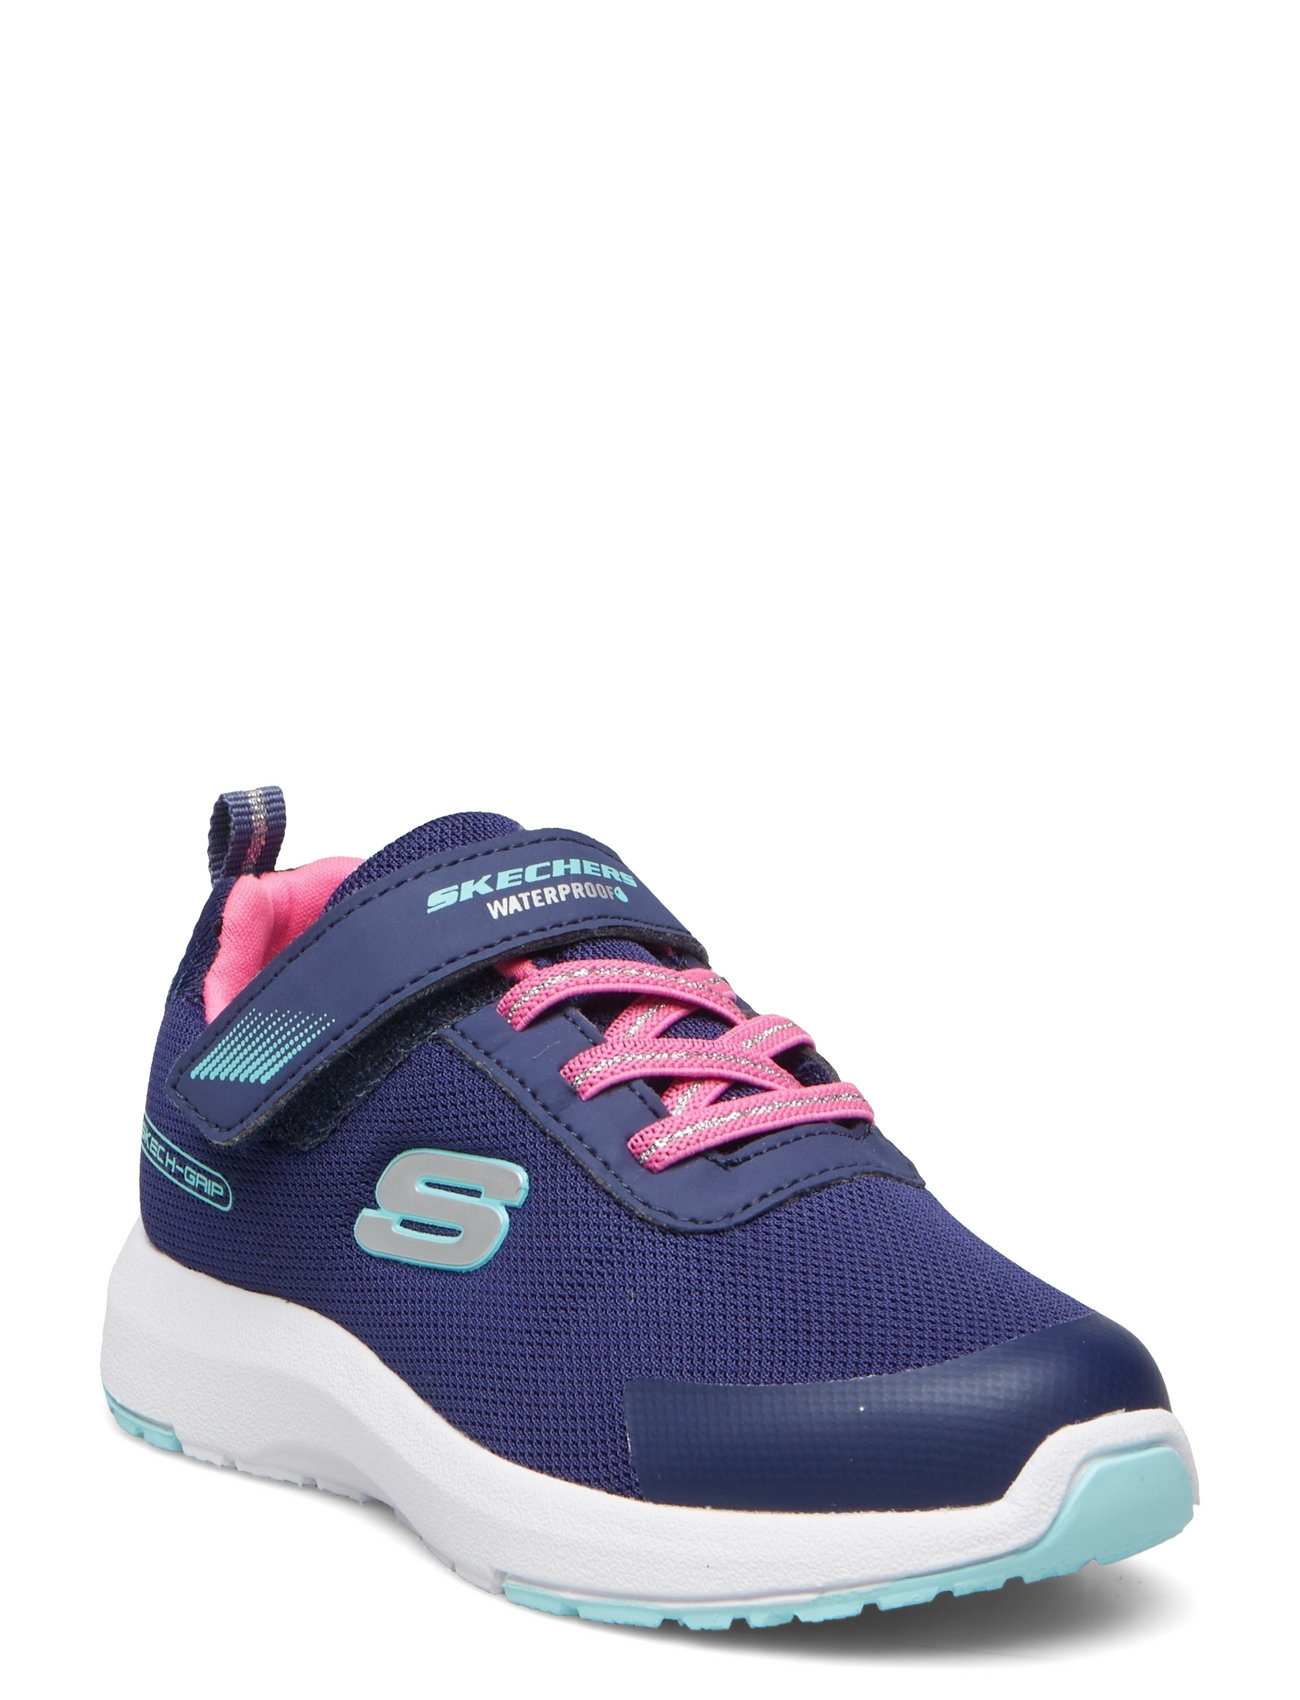 Girls Dynamic Tread - Misty Magic - Waterproof Shoes Sports Shoes Running-training Shoes Blue Skechers